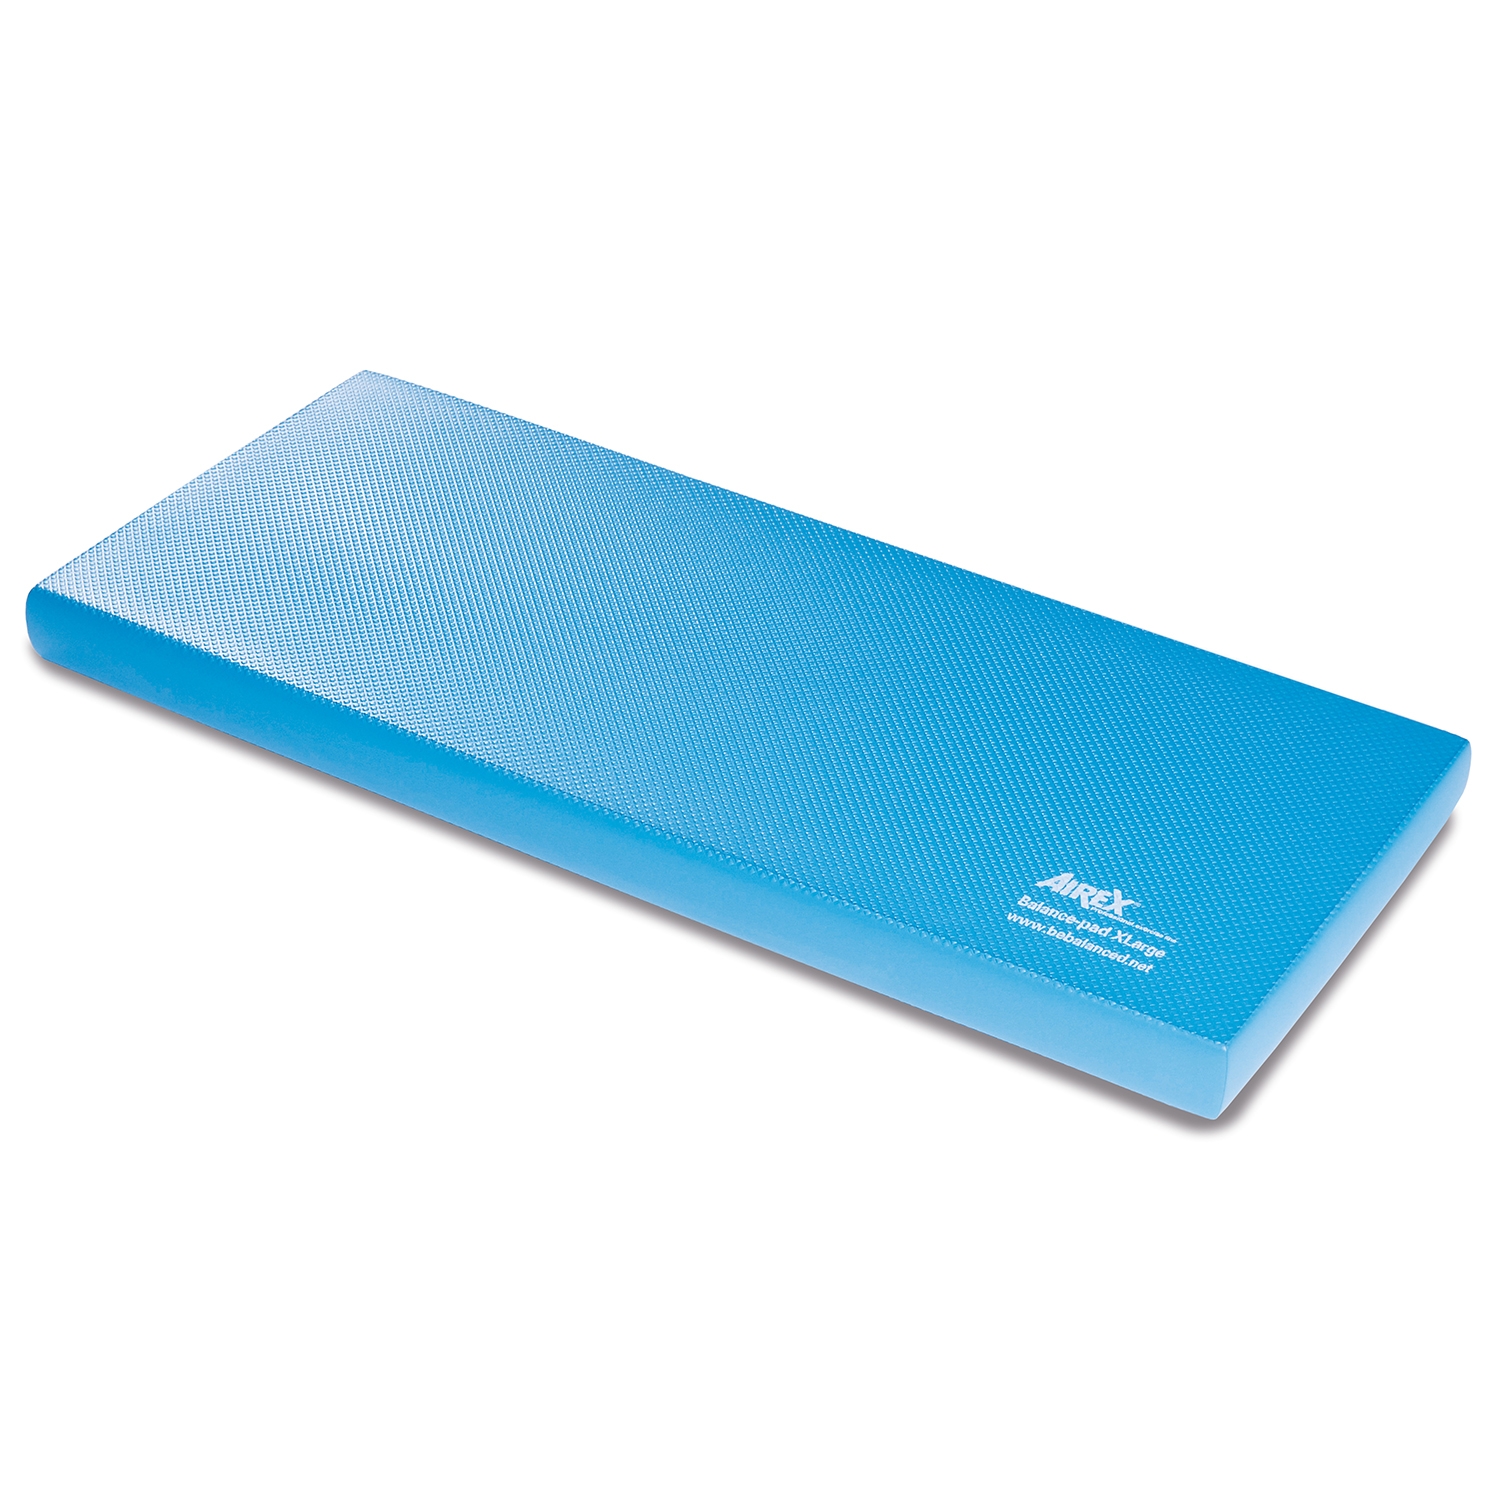 Airex Balance Pad Elite XLarge - 98 x 41 x 6 cm - blauw